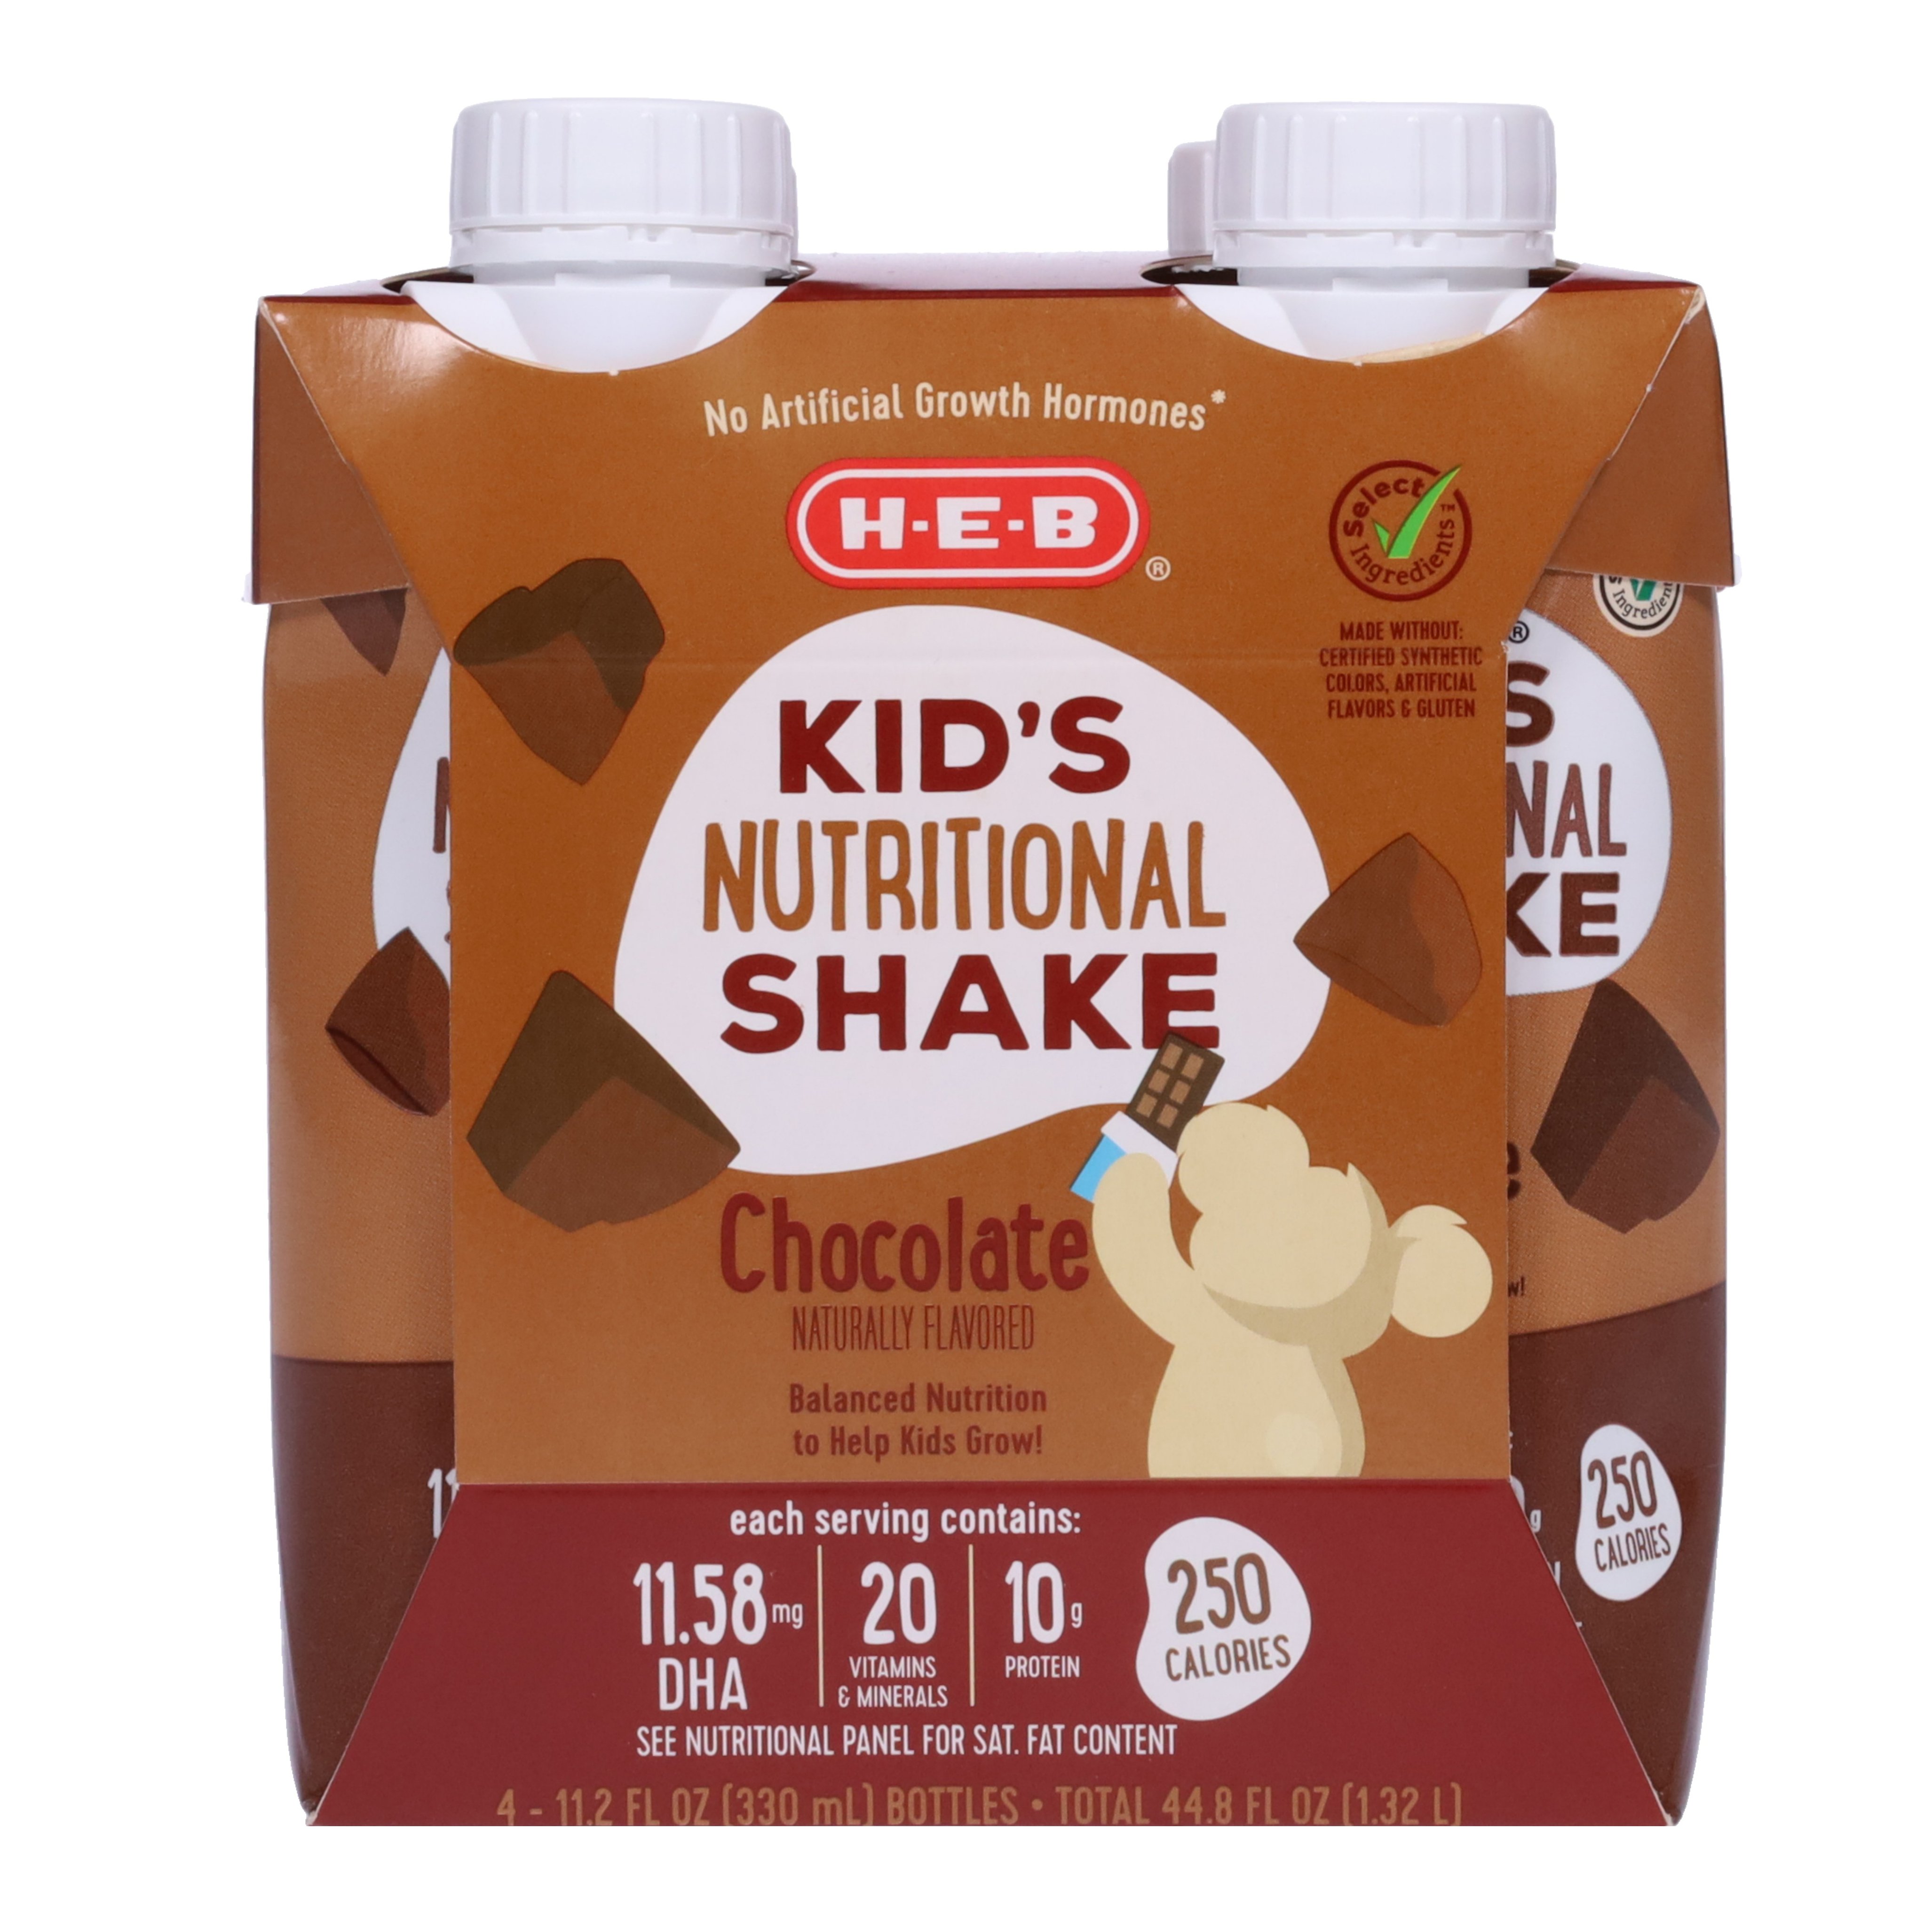 H-E-B Kid's Nutritional Shake - Chocolate - Shop Electrolytes